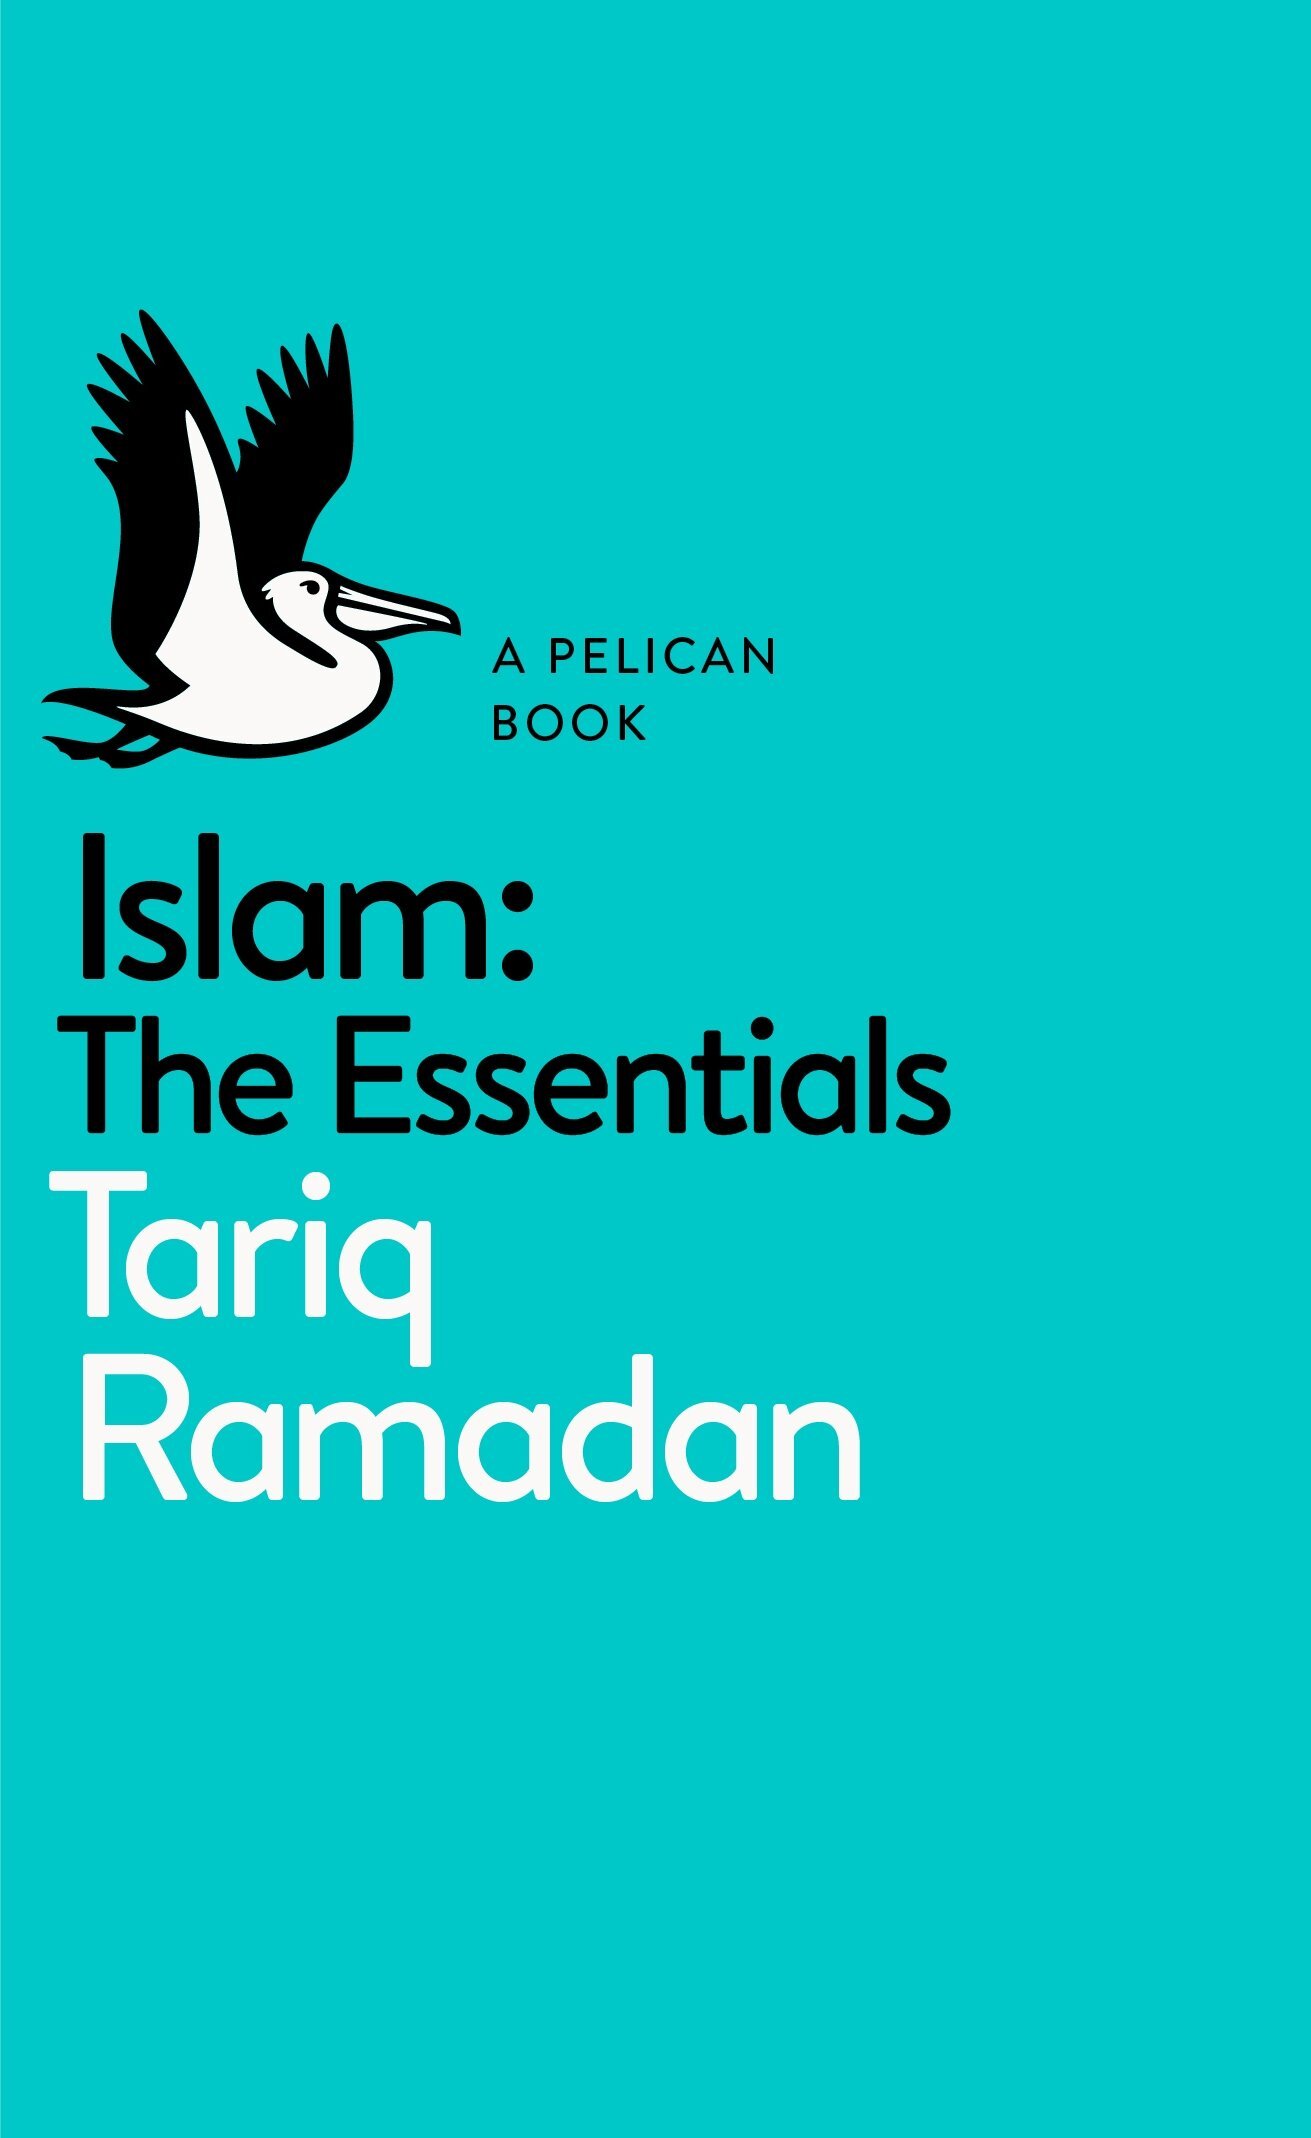 Islam The Essentials.jpg